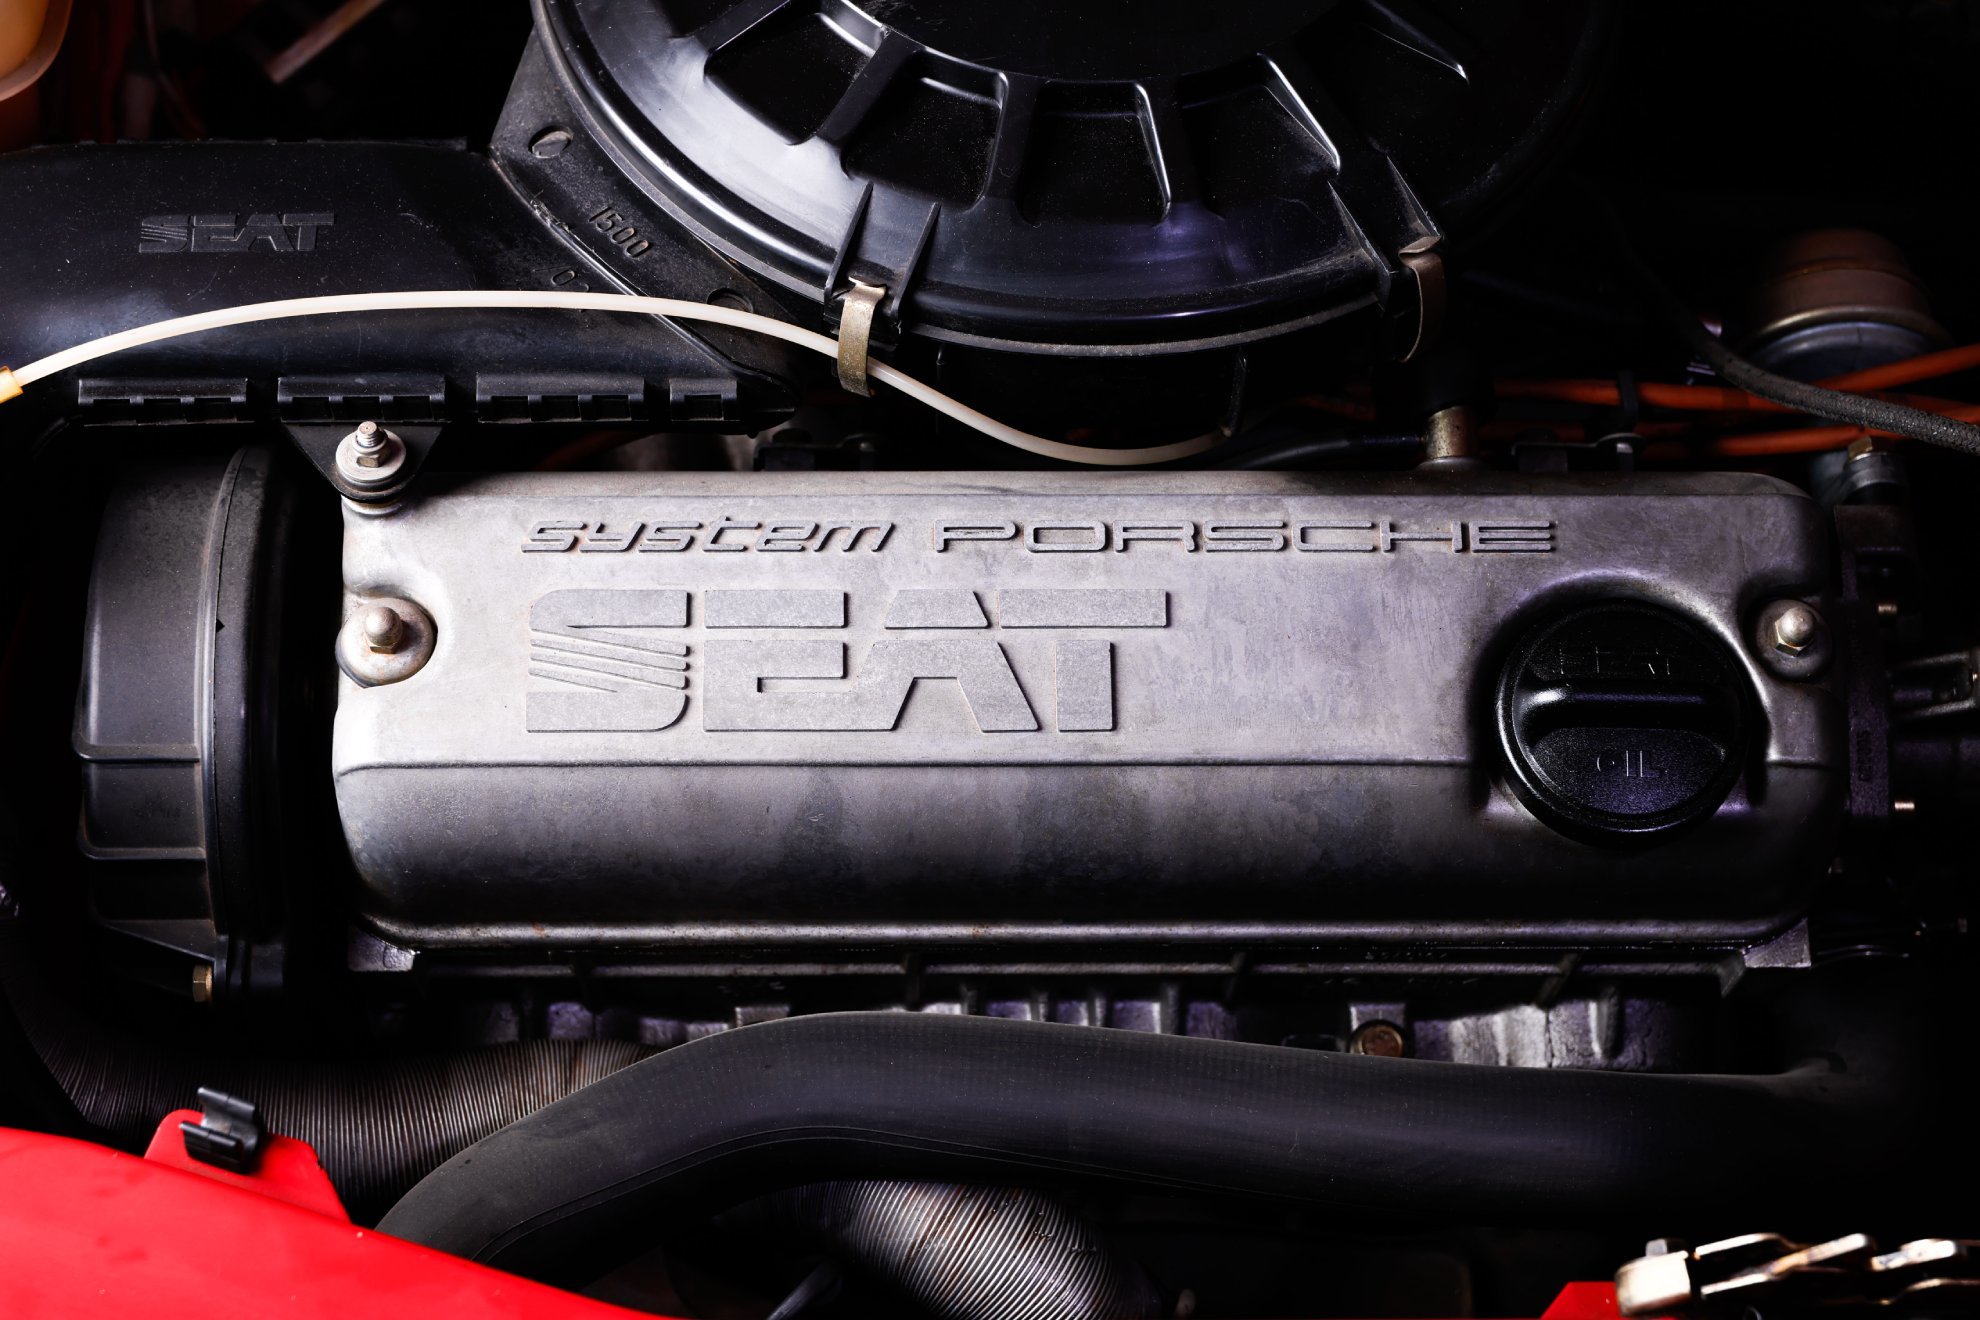 Motor System Porsche de la primera generacin.